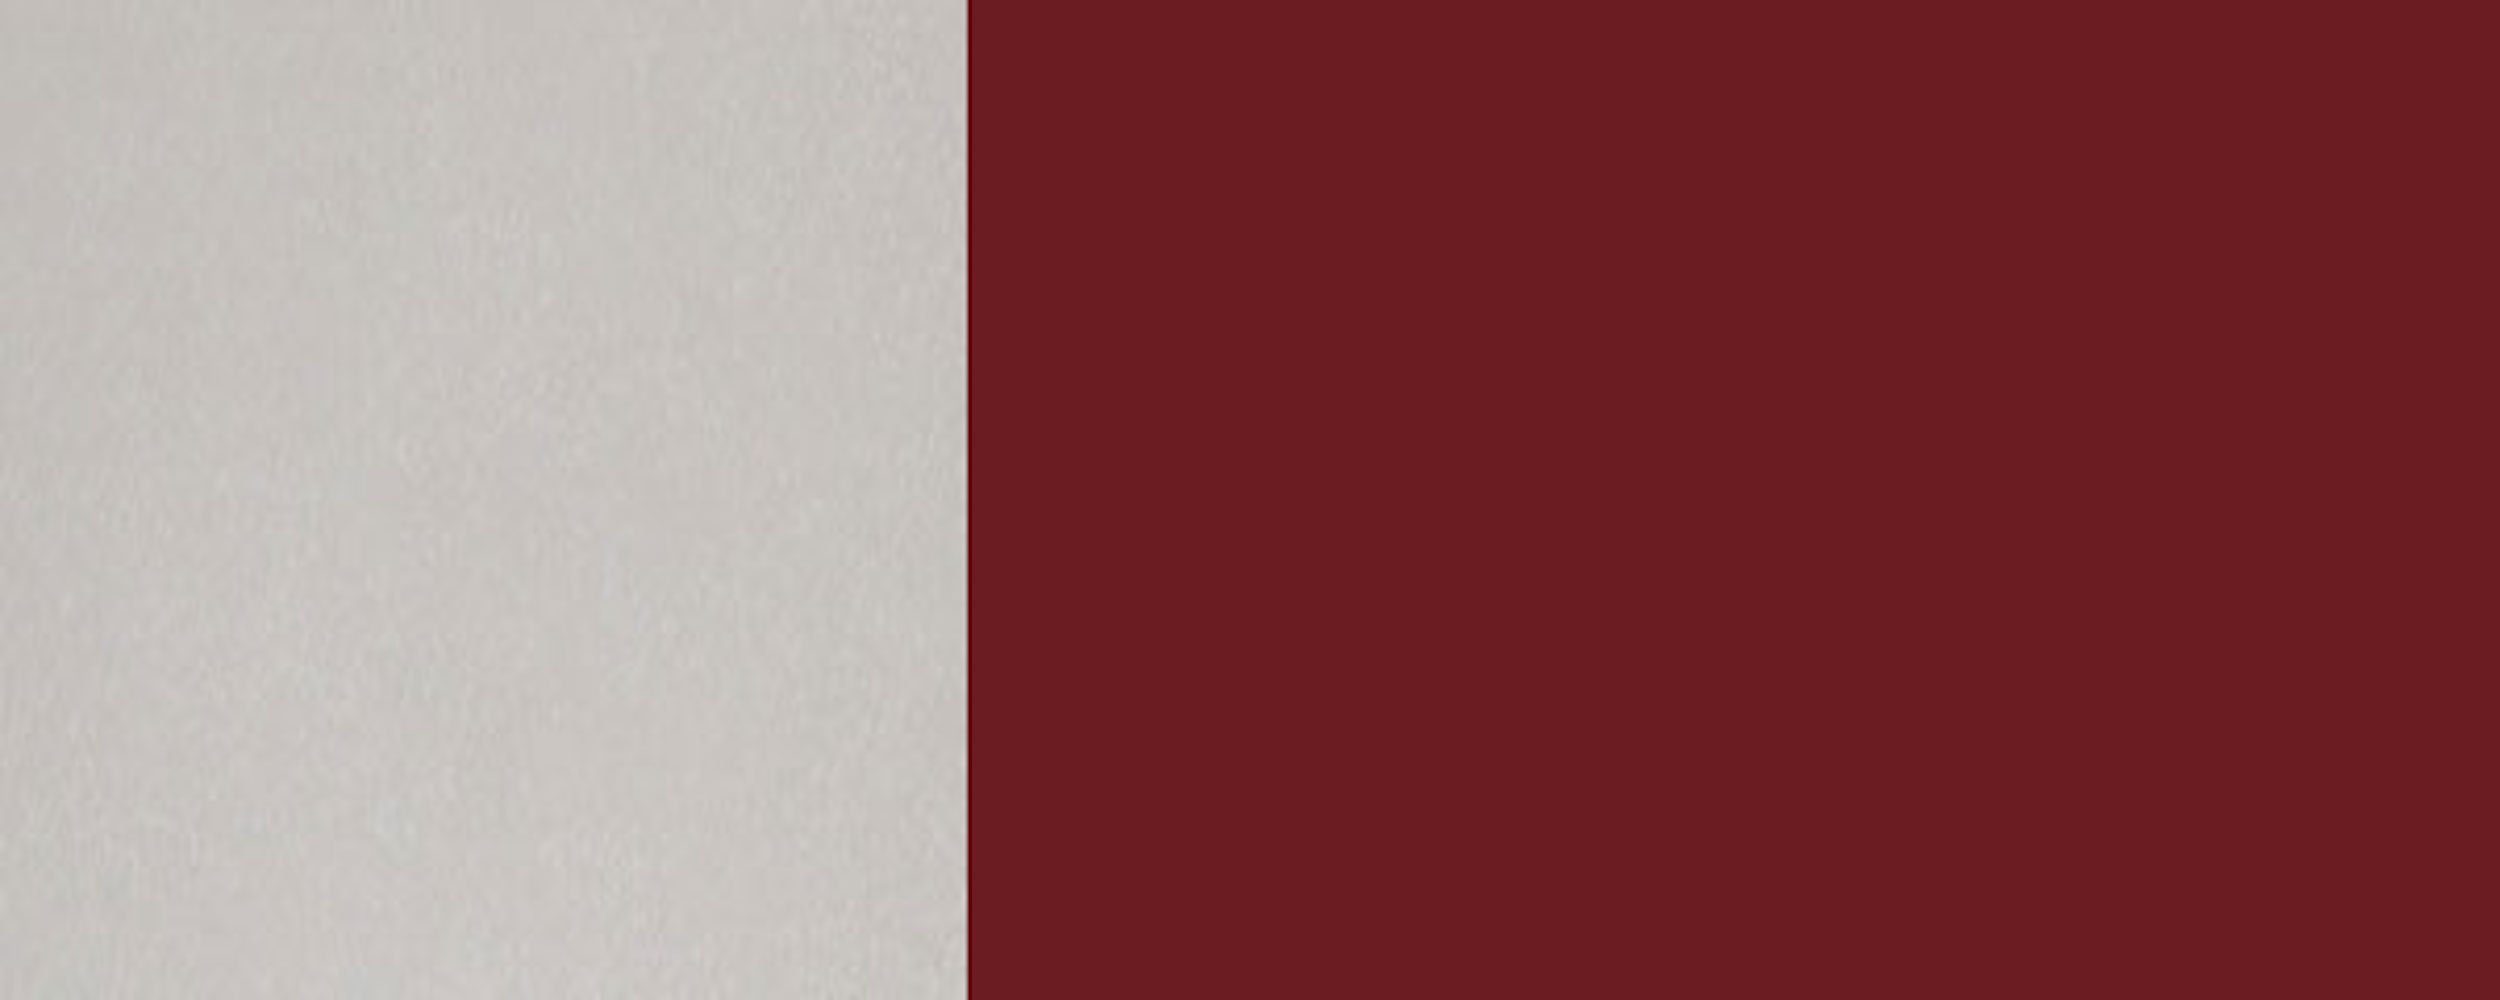 Feldmann-Wohnen Klapphängeschrank Front- und (Rimini) Rimini matt purpurrot 3004 80cm Korpusfarbe 1-türig RAL wählbar